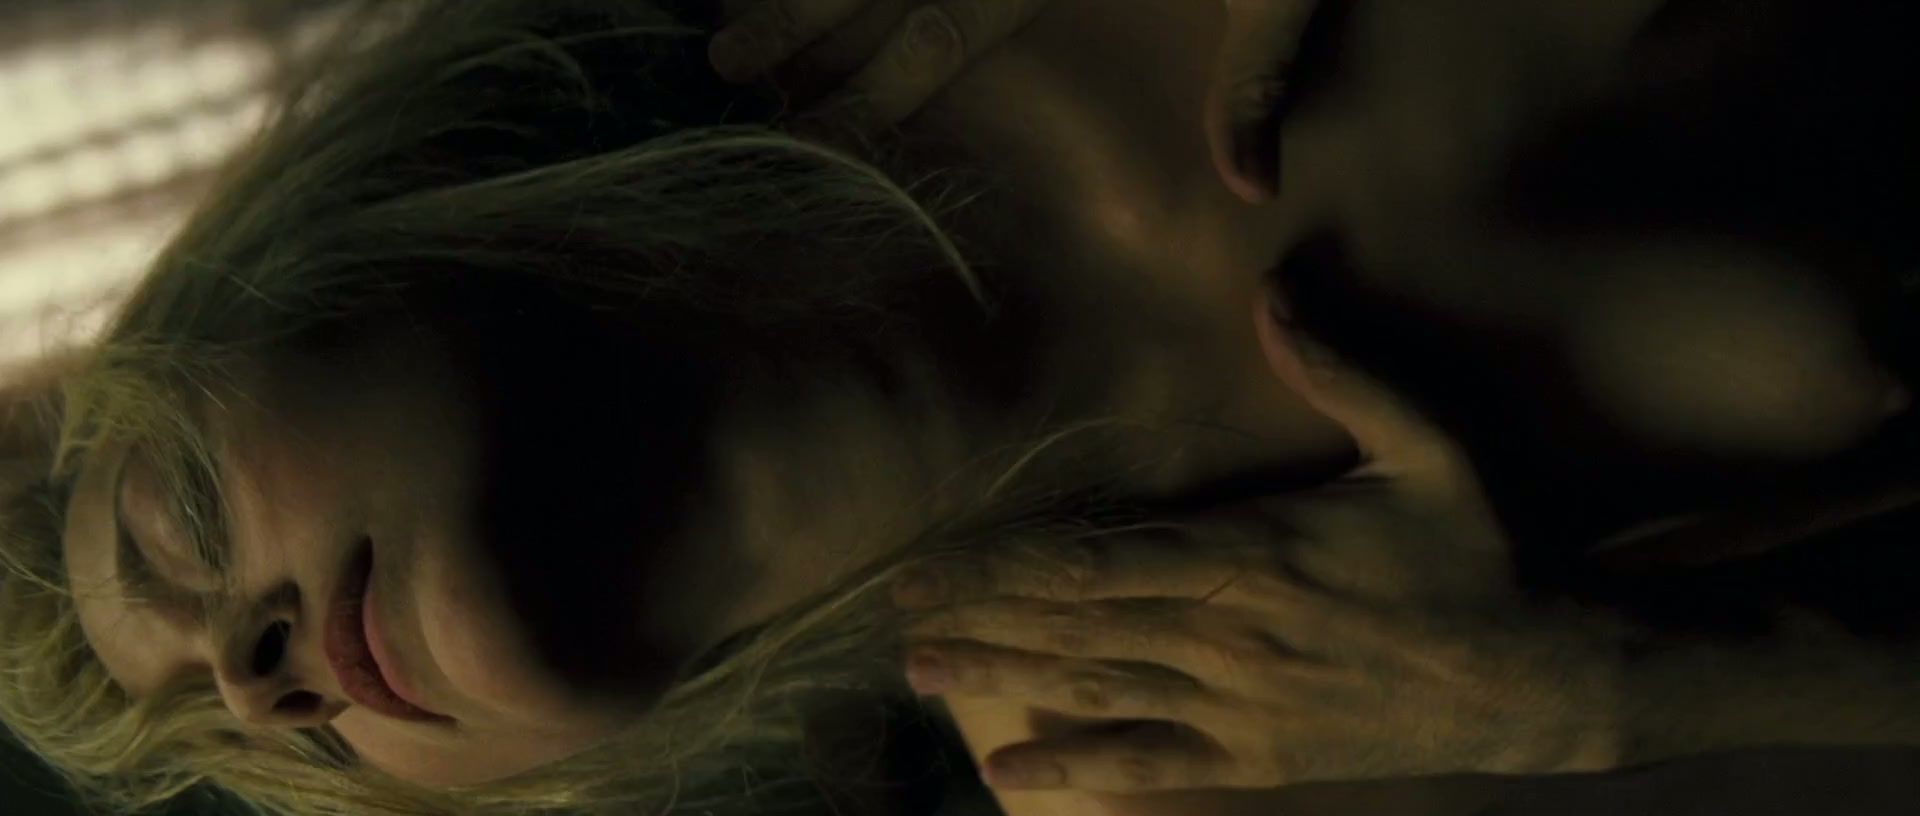 Long Hair Naked Marion Cotillard - La boite noire (2005) javx - 1